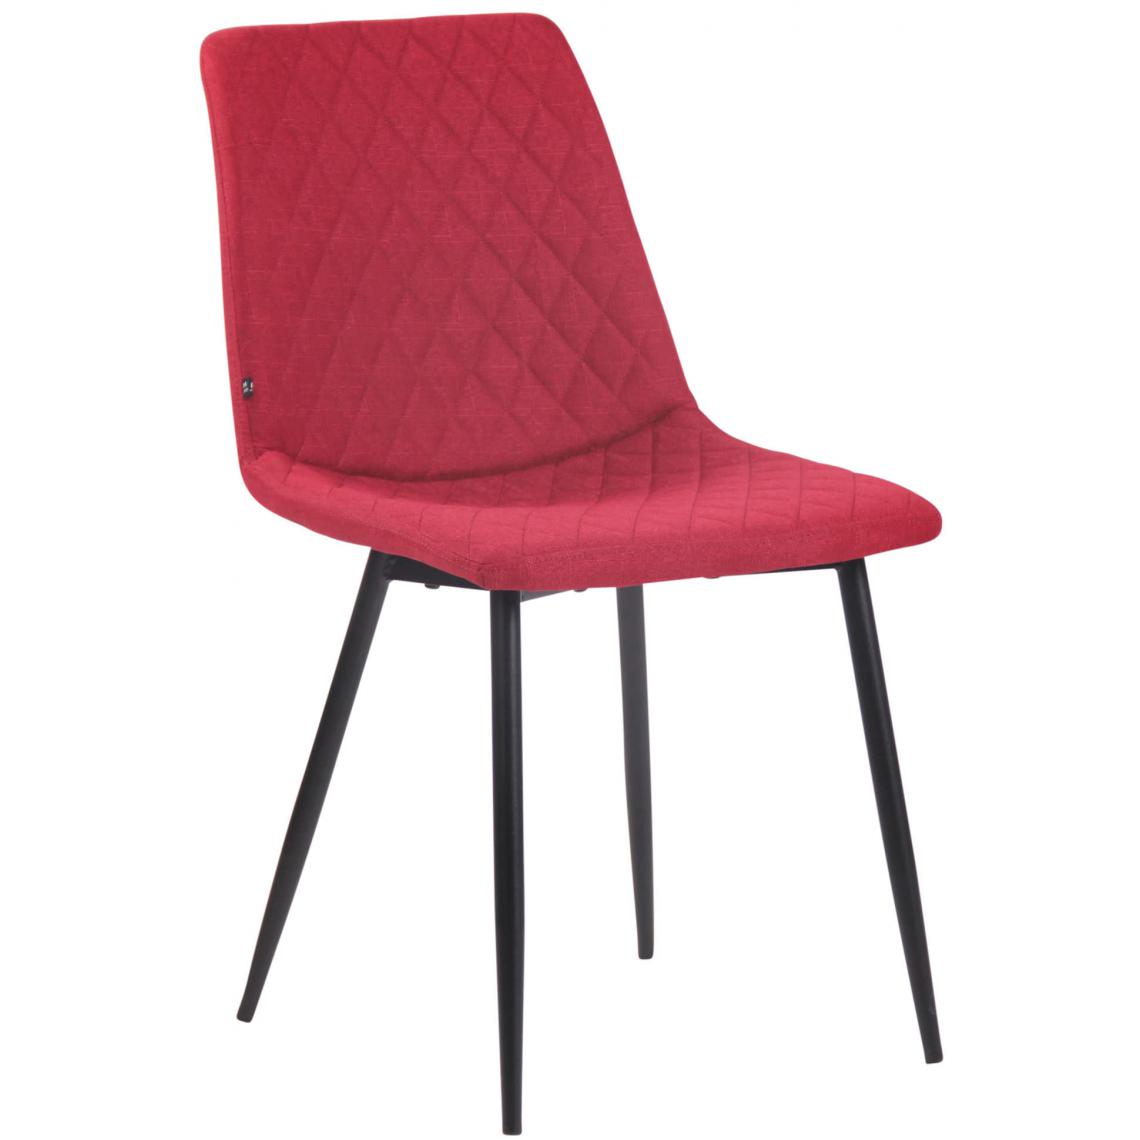 Icaverne - Joli Chaise en tissu reference Port-d’Espagne couleur rouge - Chaises